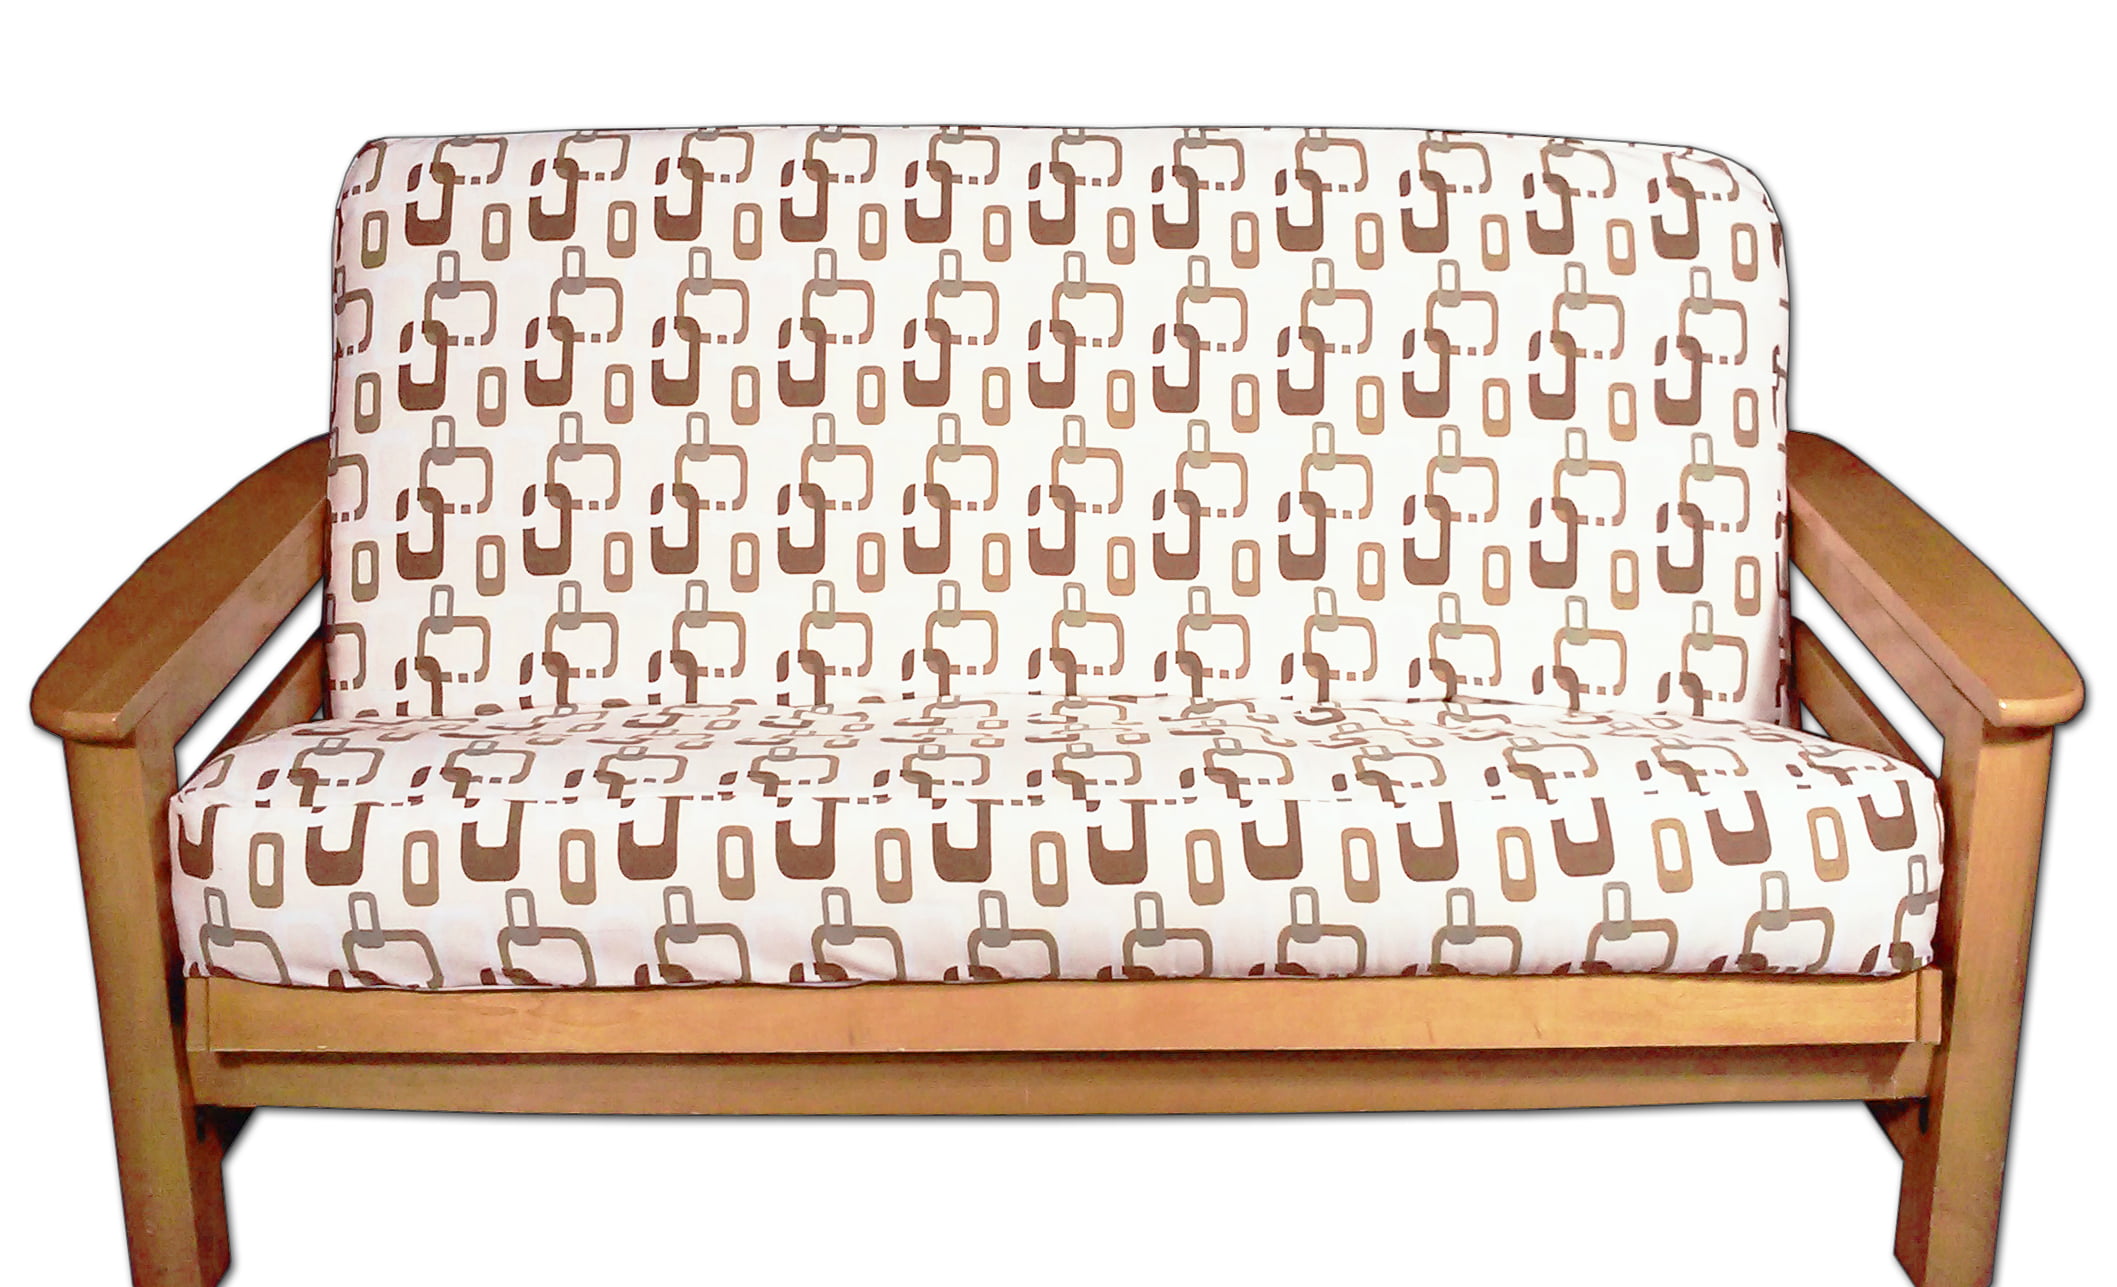 futon mattress covers in store walmart